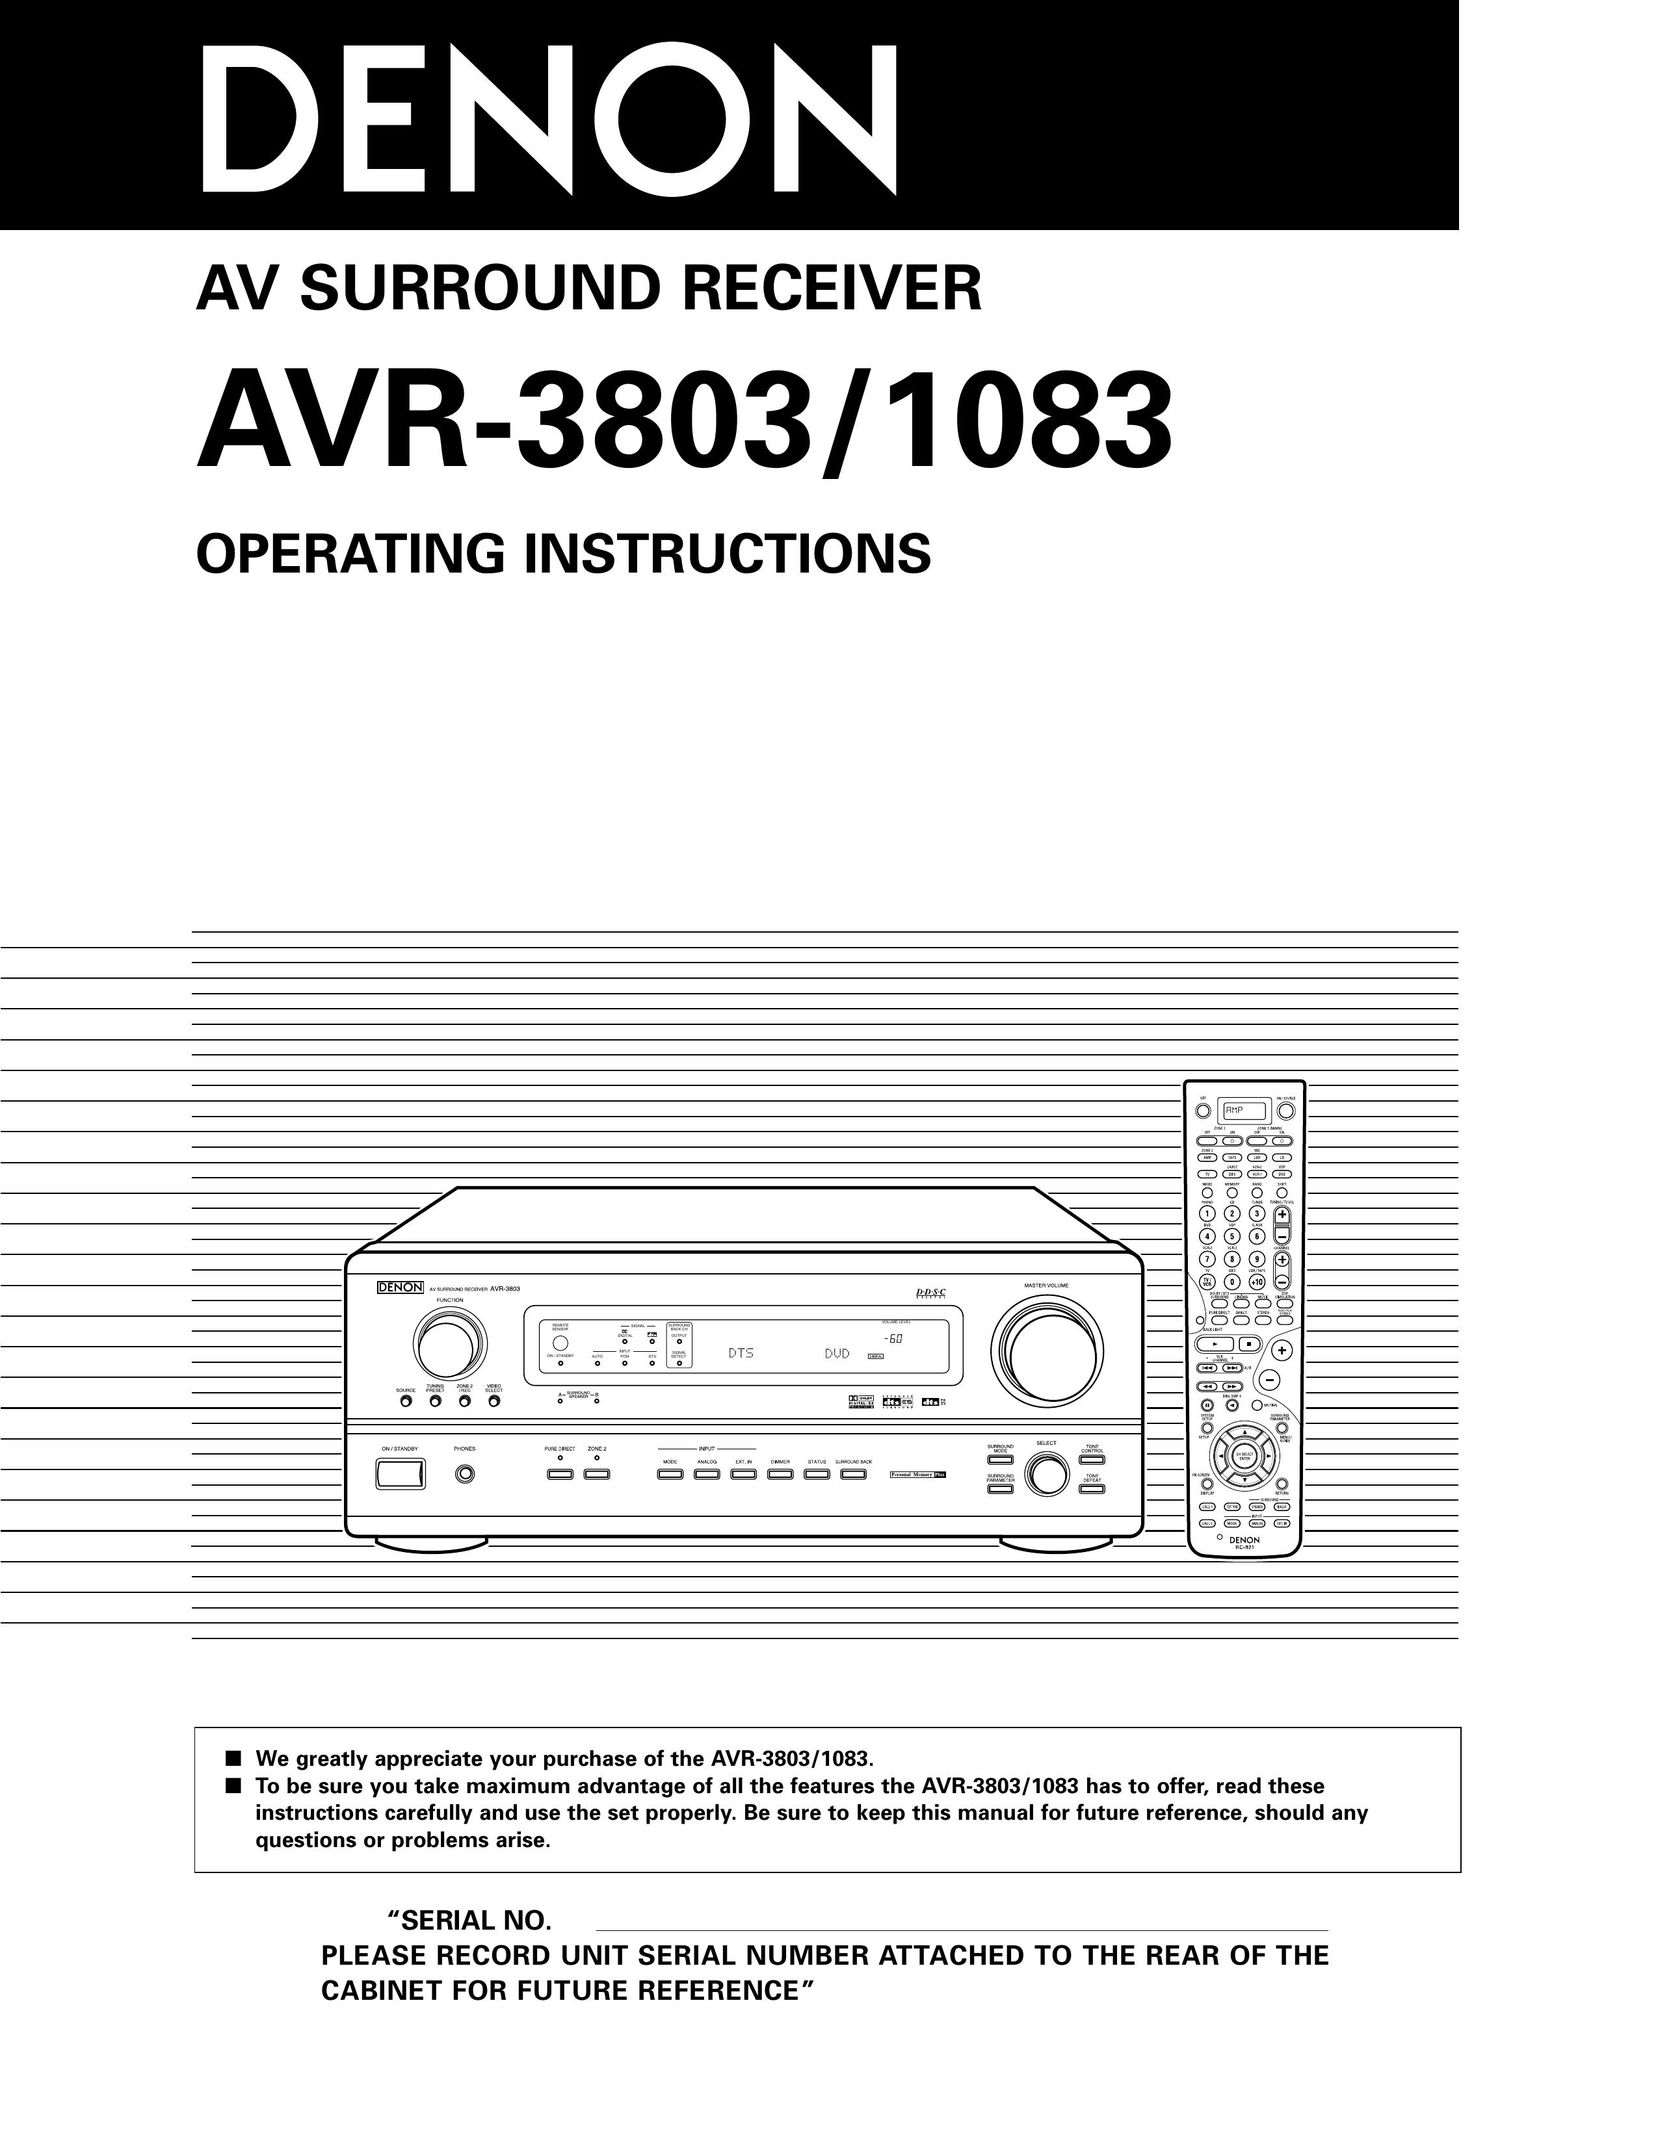 Denon AVR-3803 Stereo System User Manual